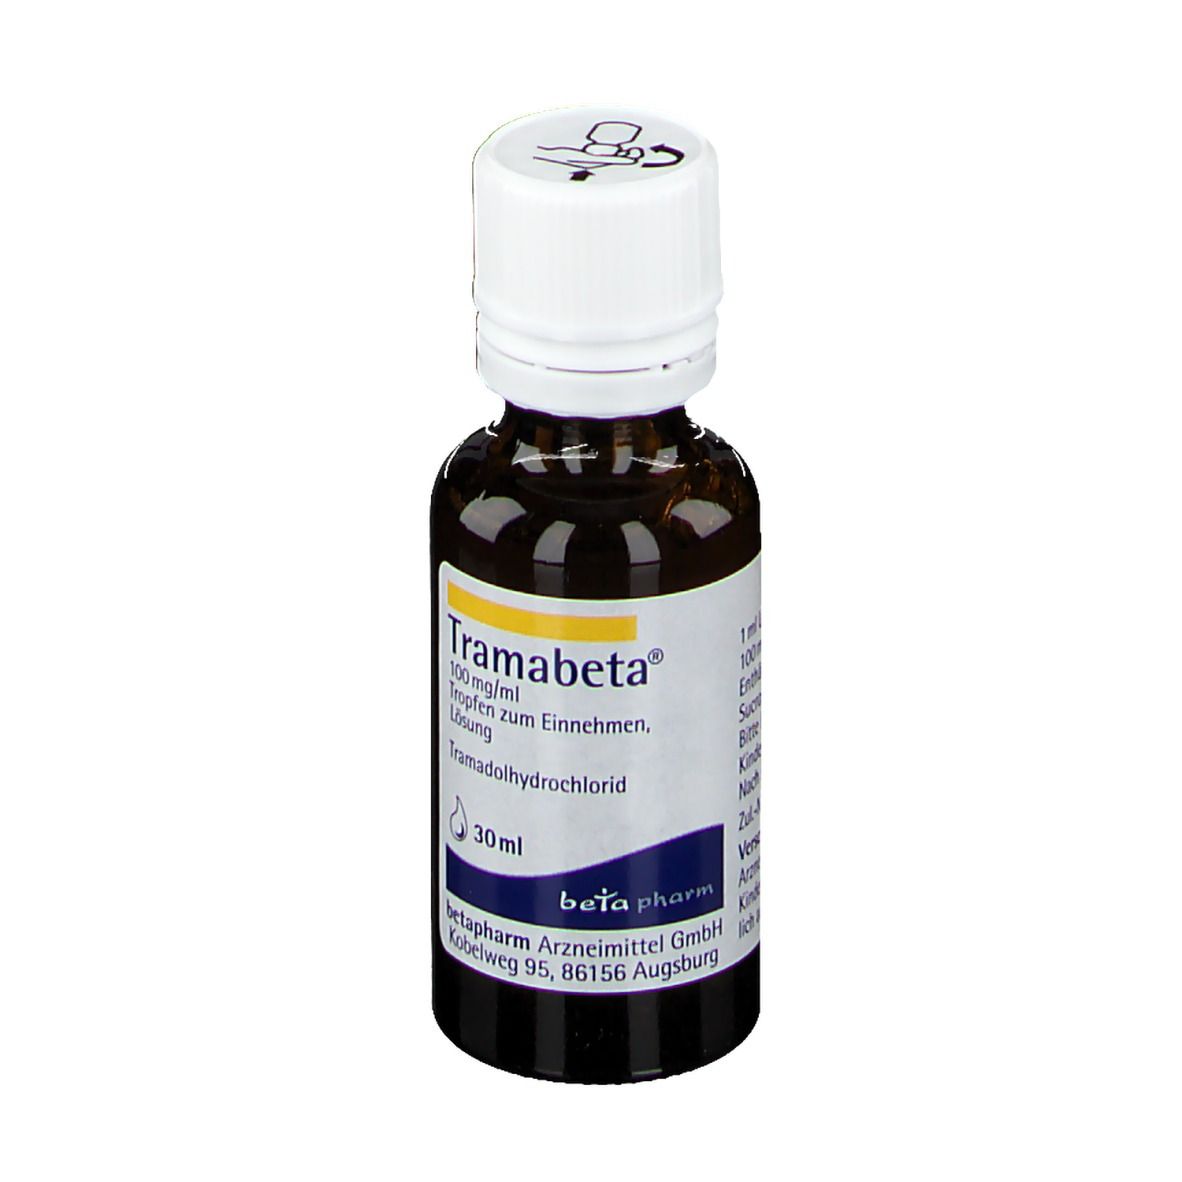 Tramabeta® 100 mg/ml Lösung